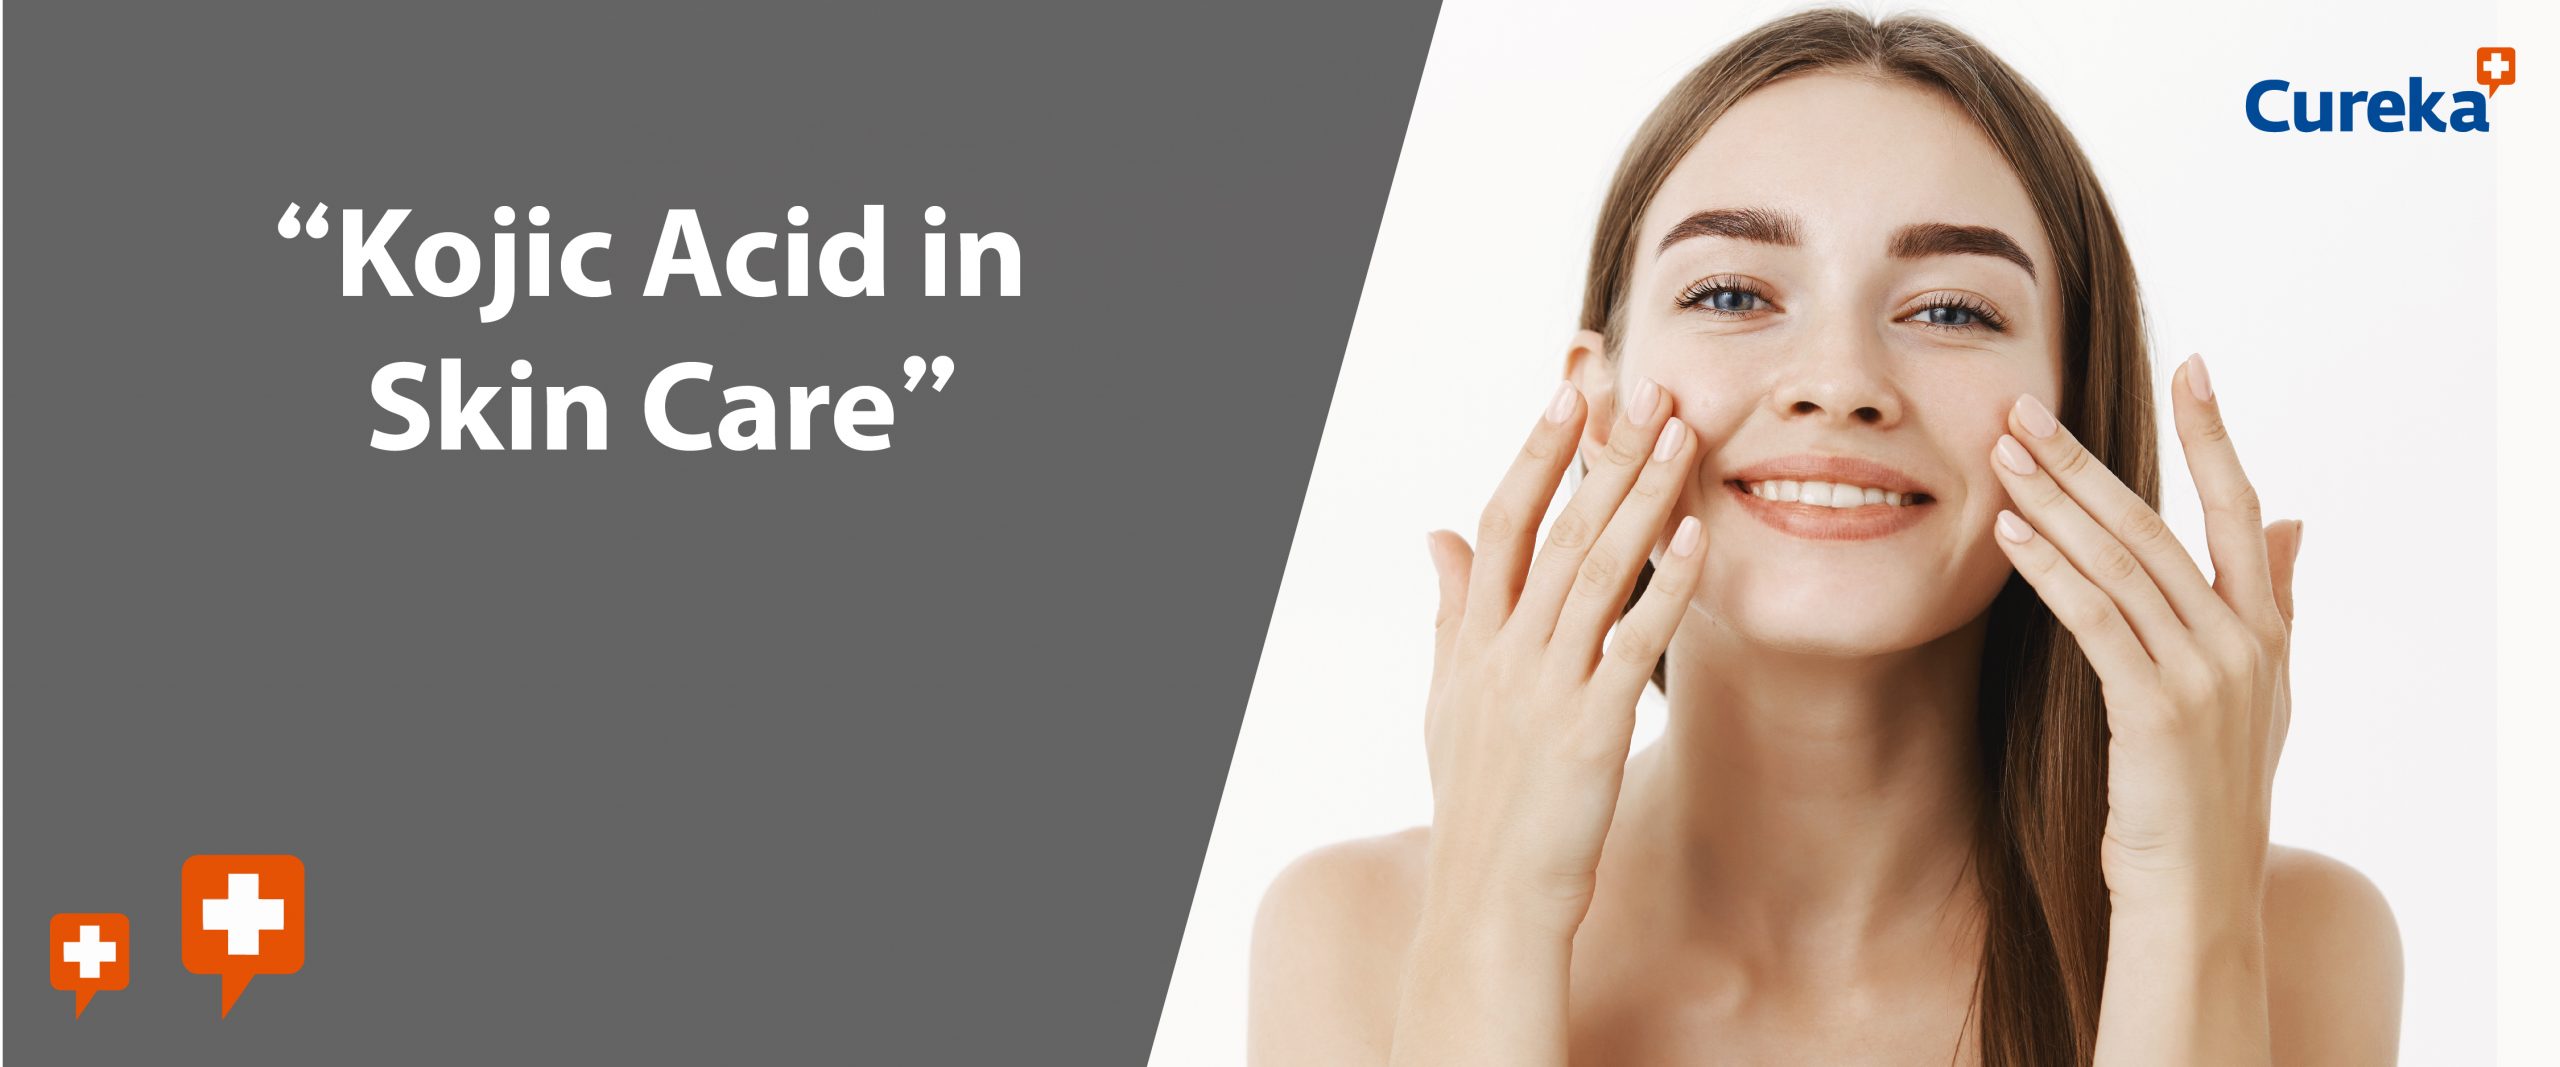 kojic acid in skin care treatment